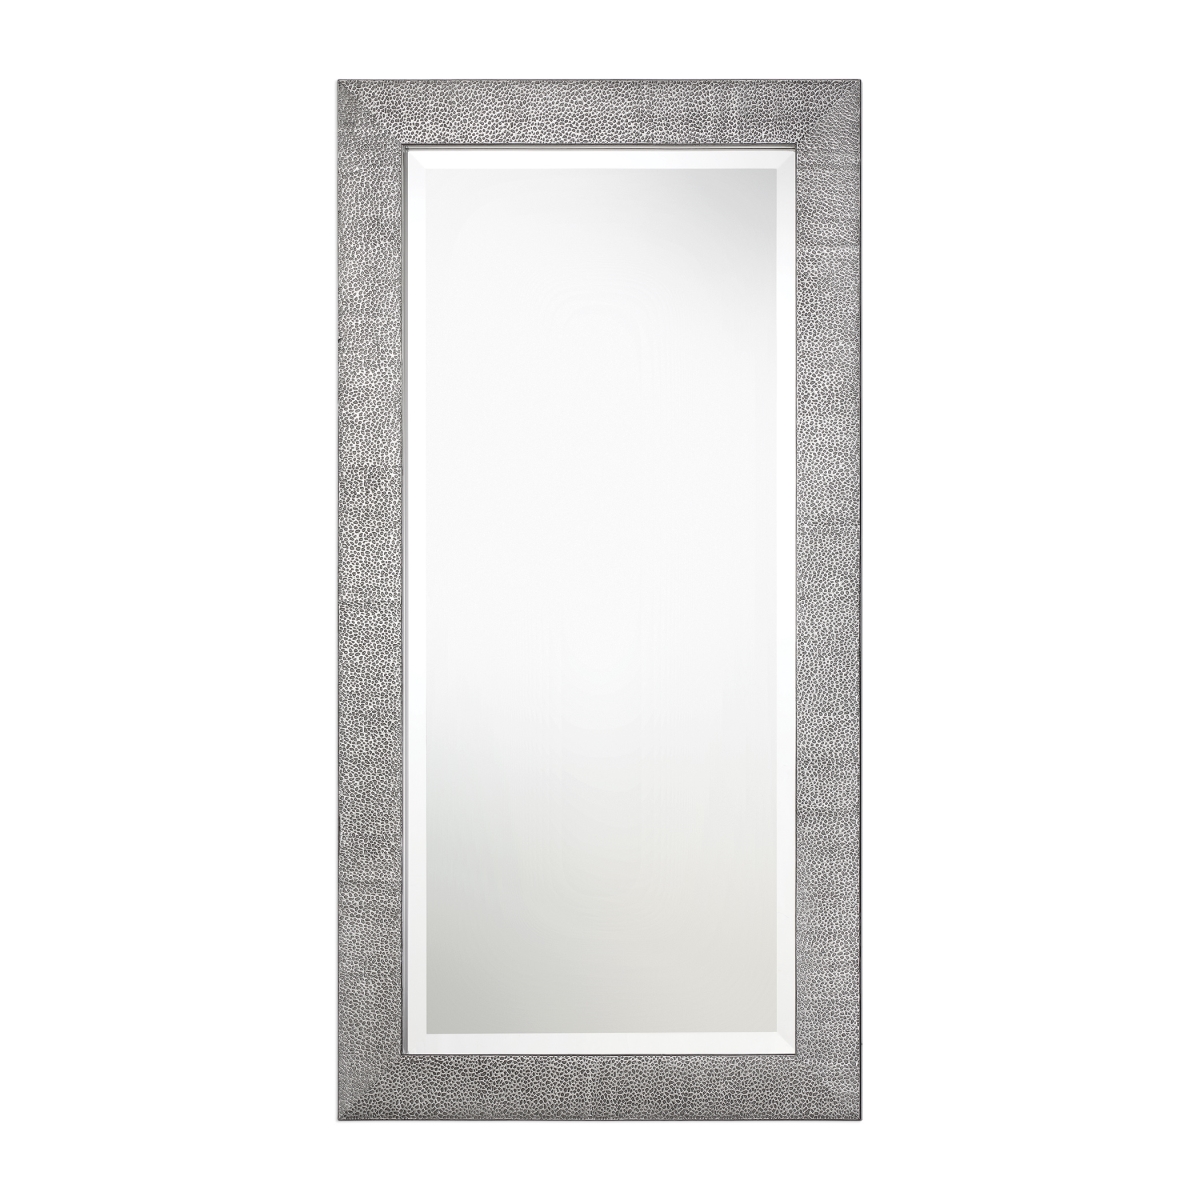 Picture of 212 Main 09326 Tulare Metallic Silver Mirror